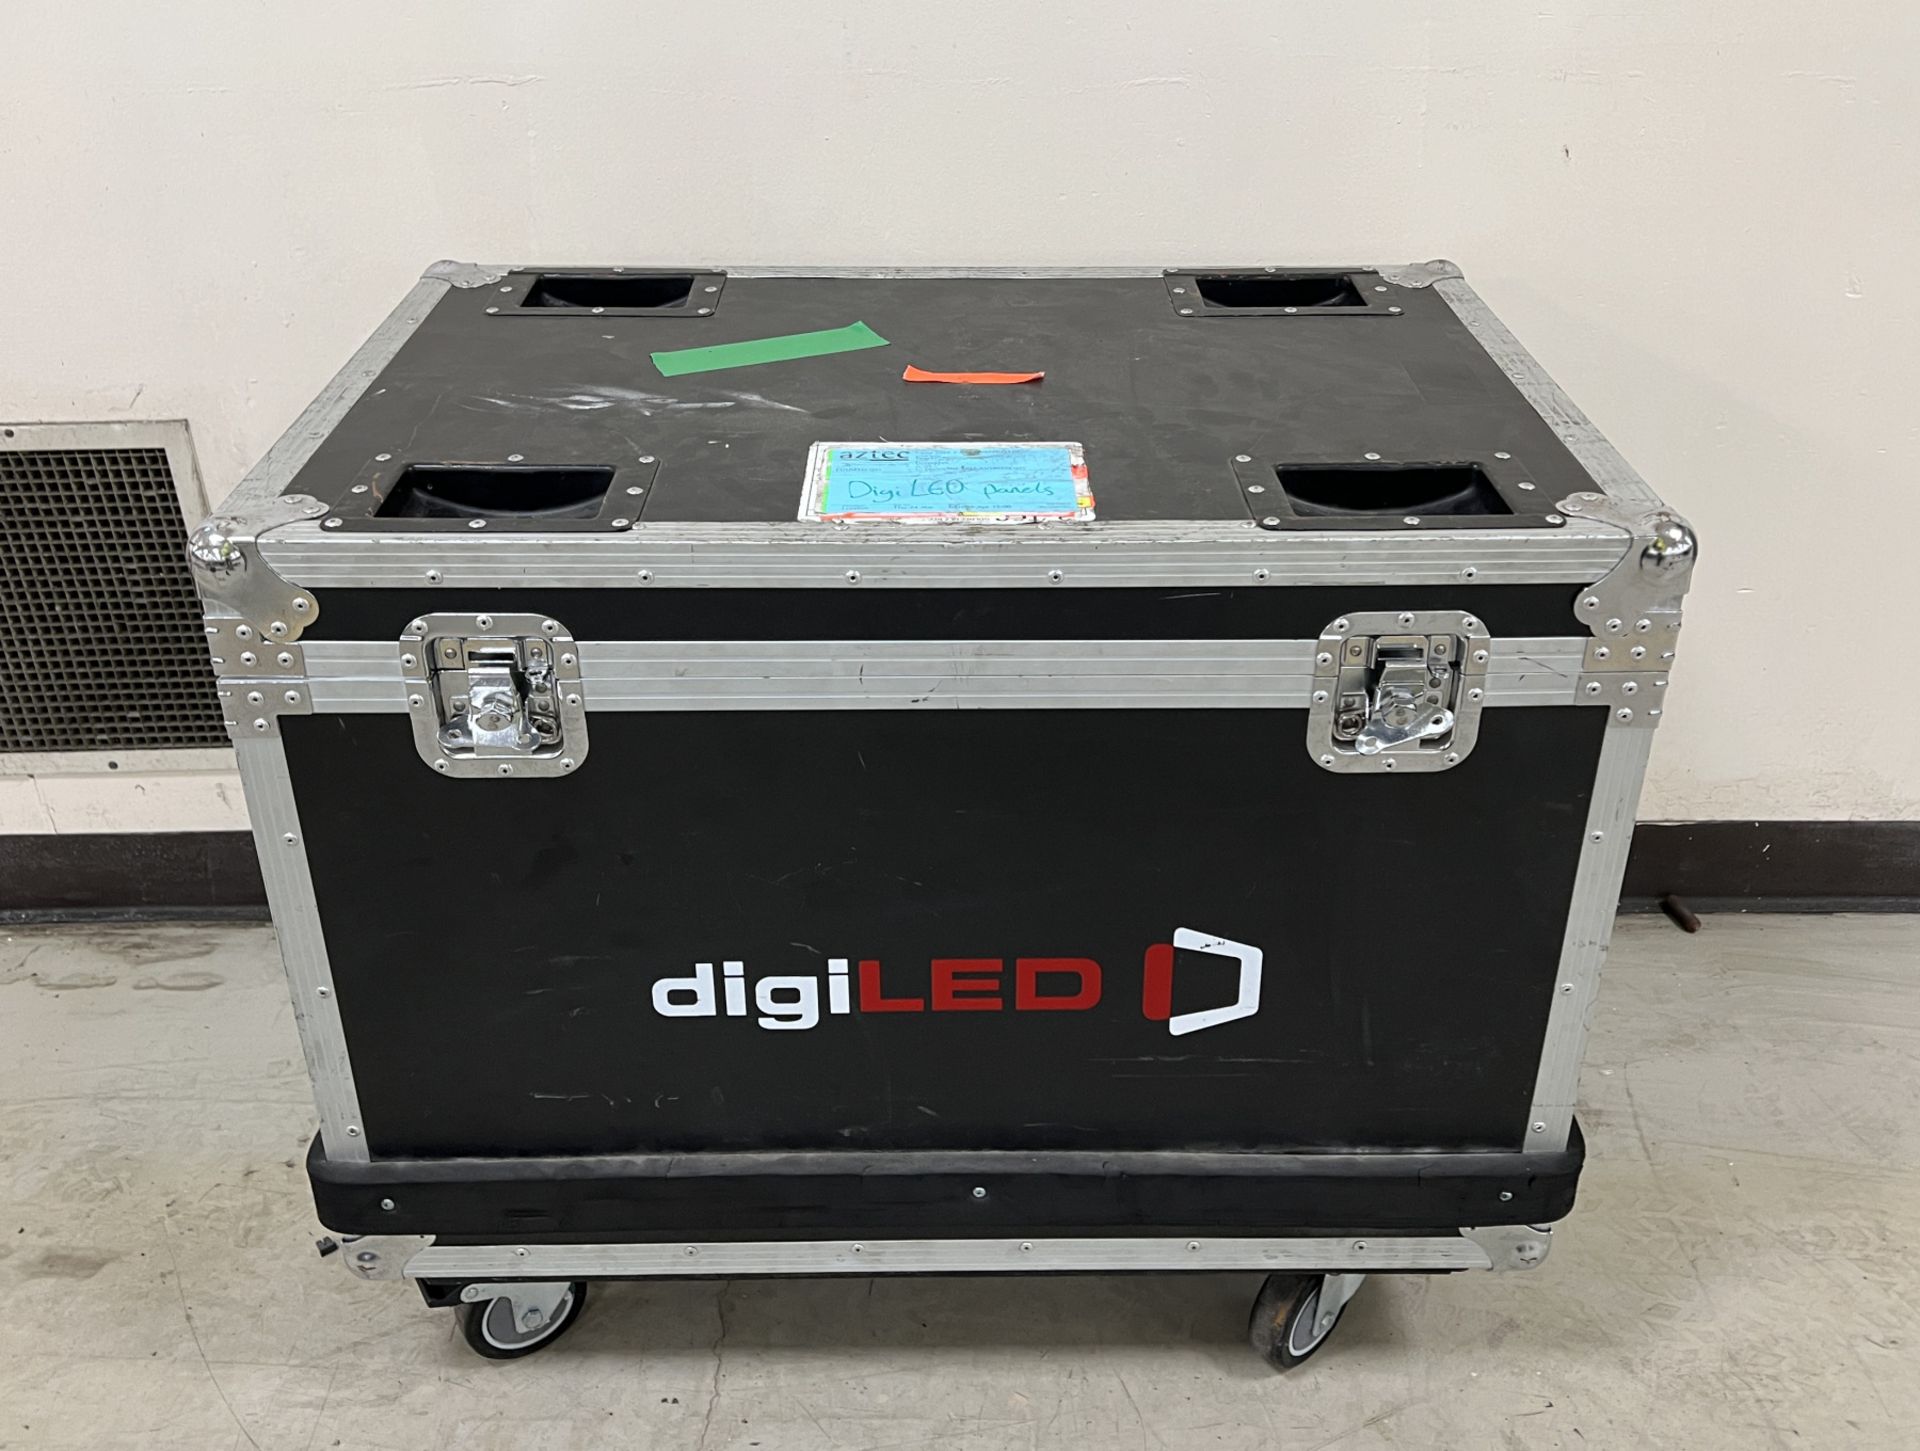 Digi LED HRI3900 kit - 120 LED tiles housed in 20 wheeled flight cases - see description for details - Image 87 of 196